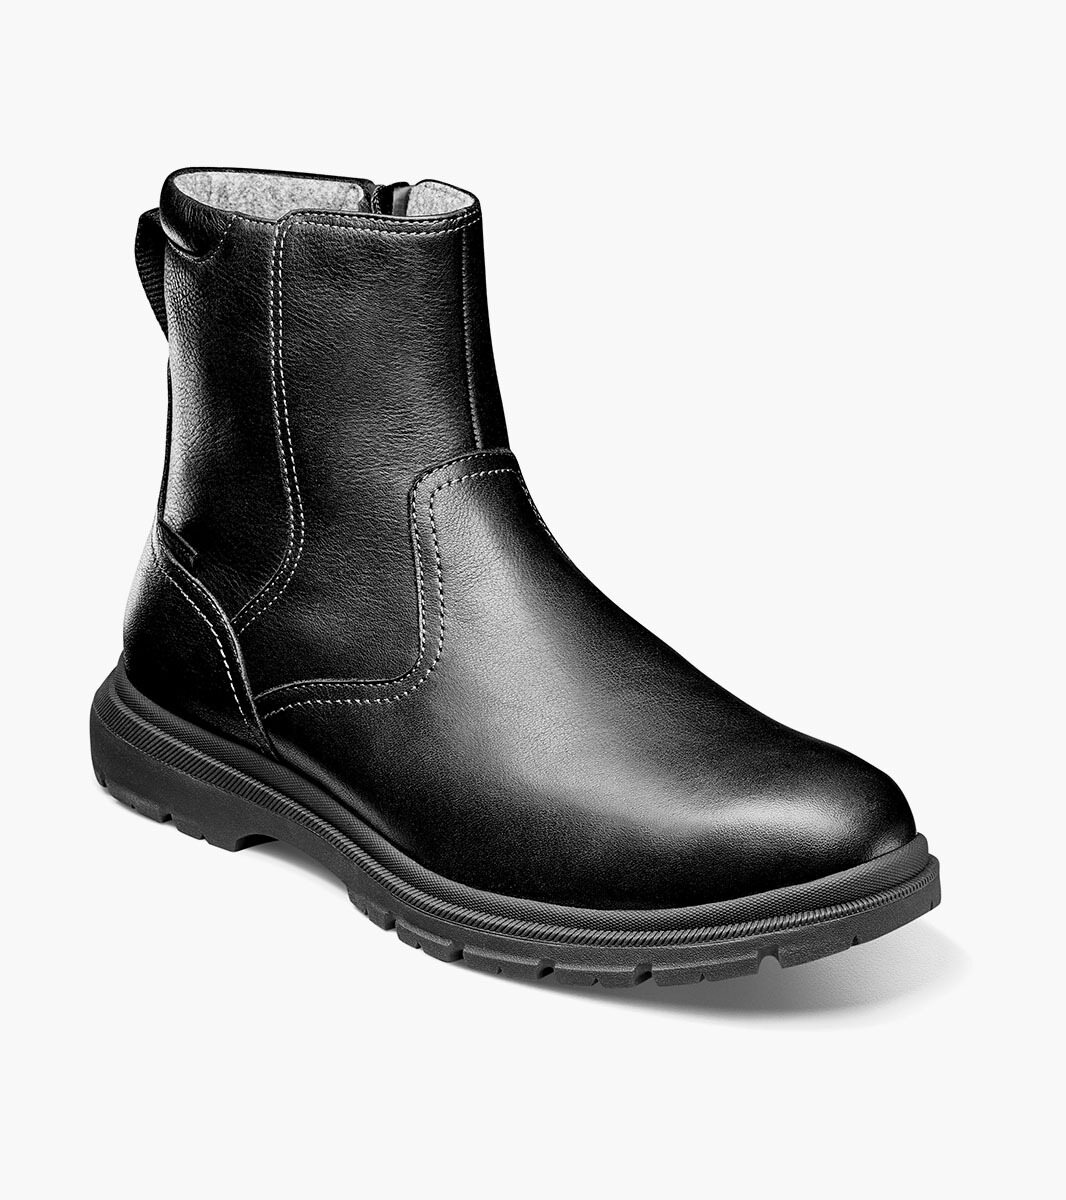 mens waterproof dress boots